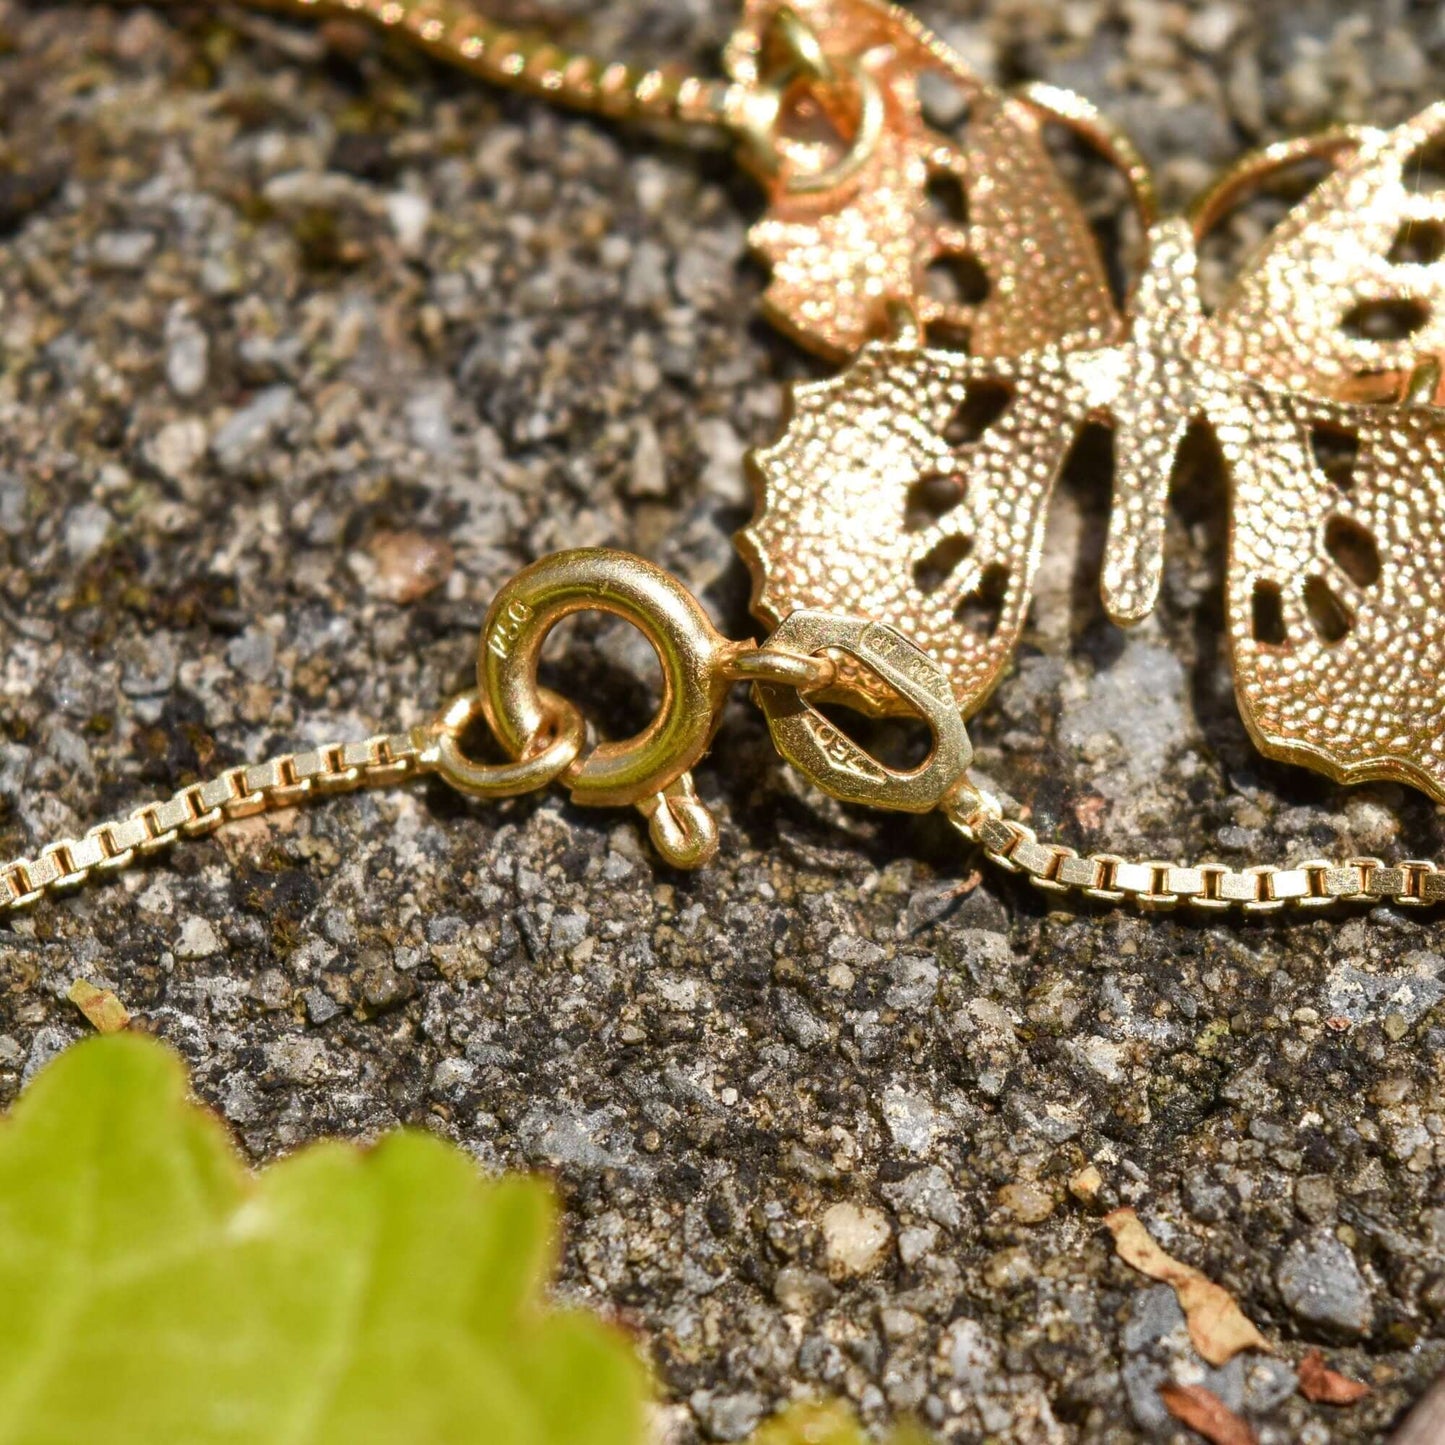 Italian 18K Enamel Butterfly Pendant Necklace, Elegant Yellow Gold Necklace, Estate Jewelry, 15 1/2" L